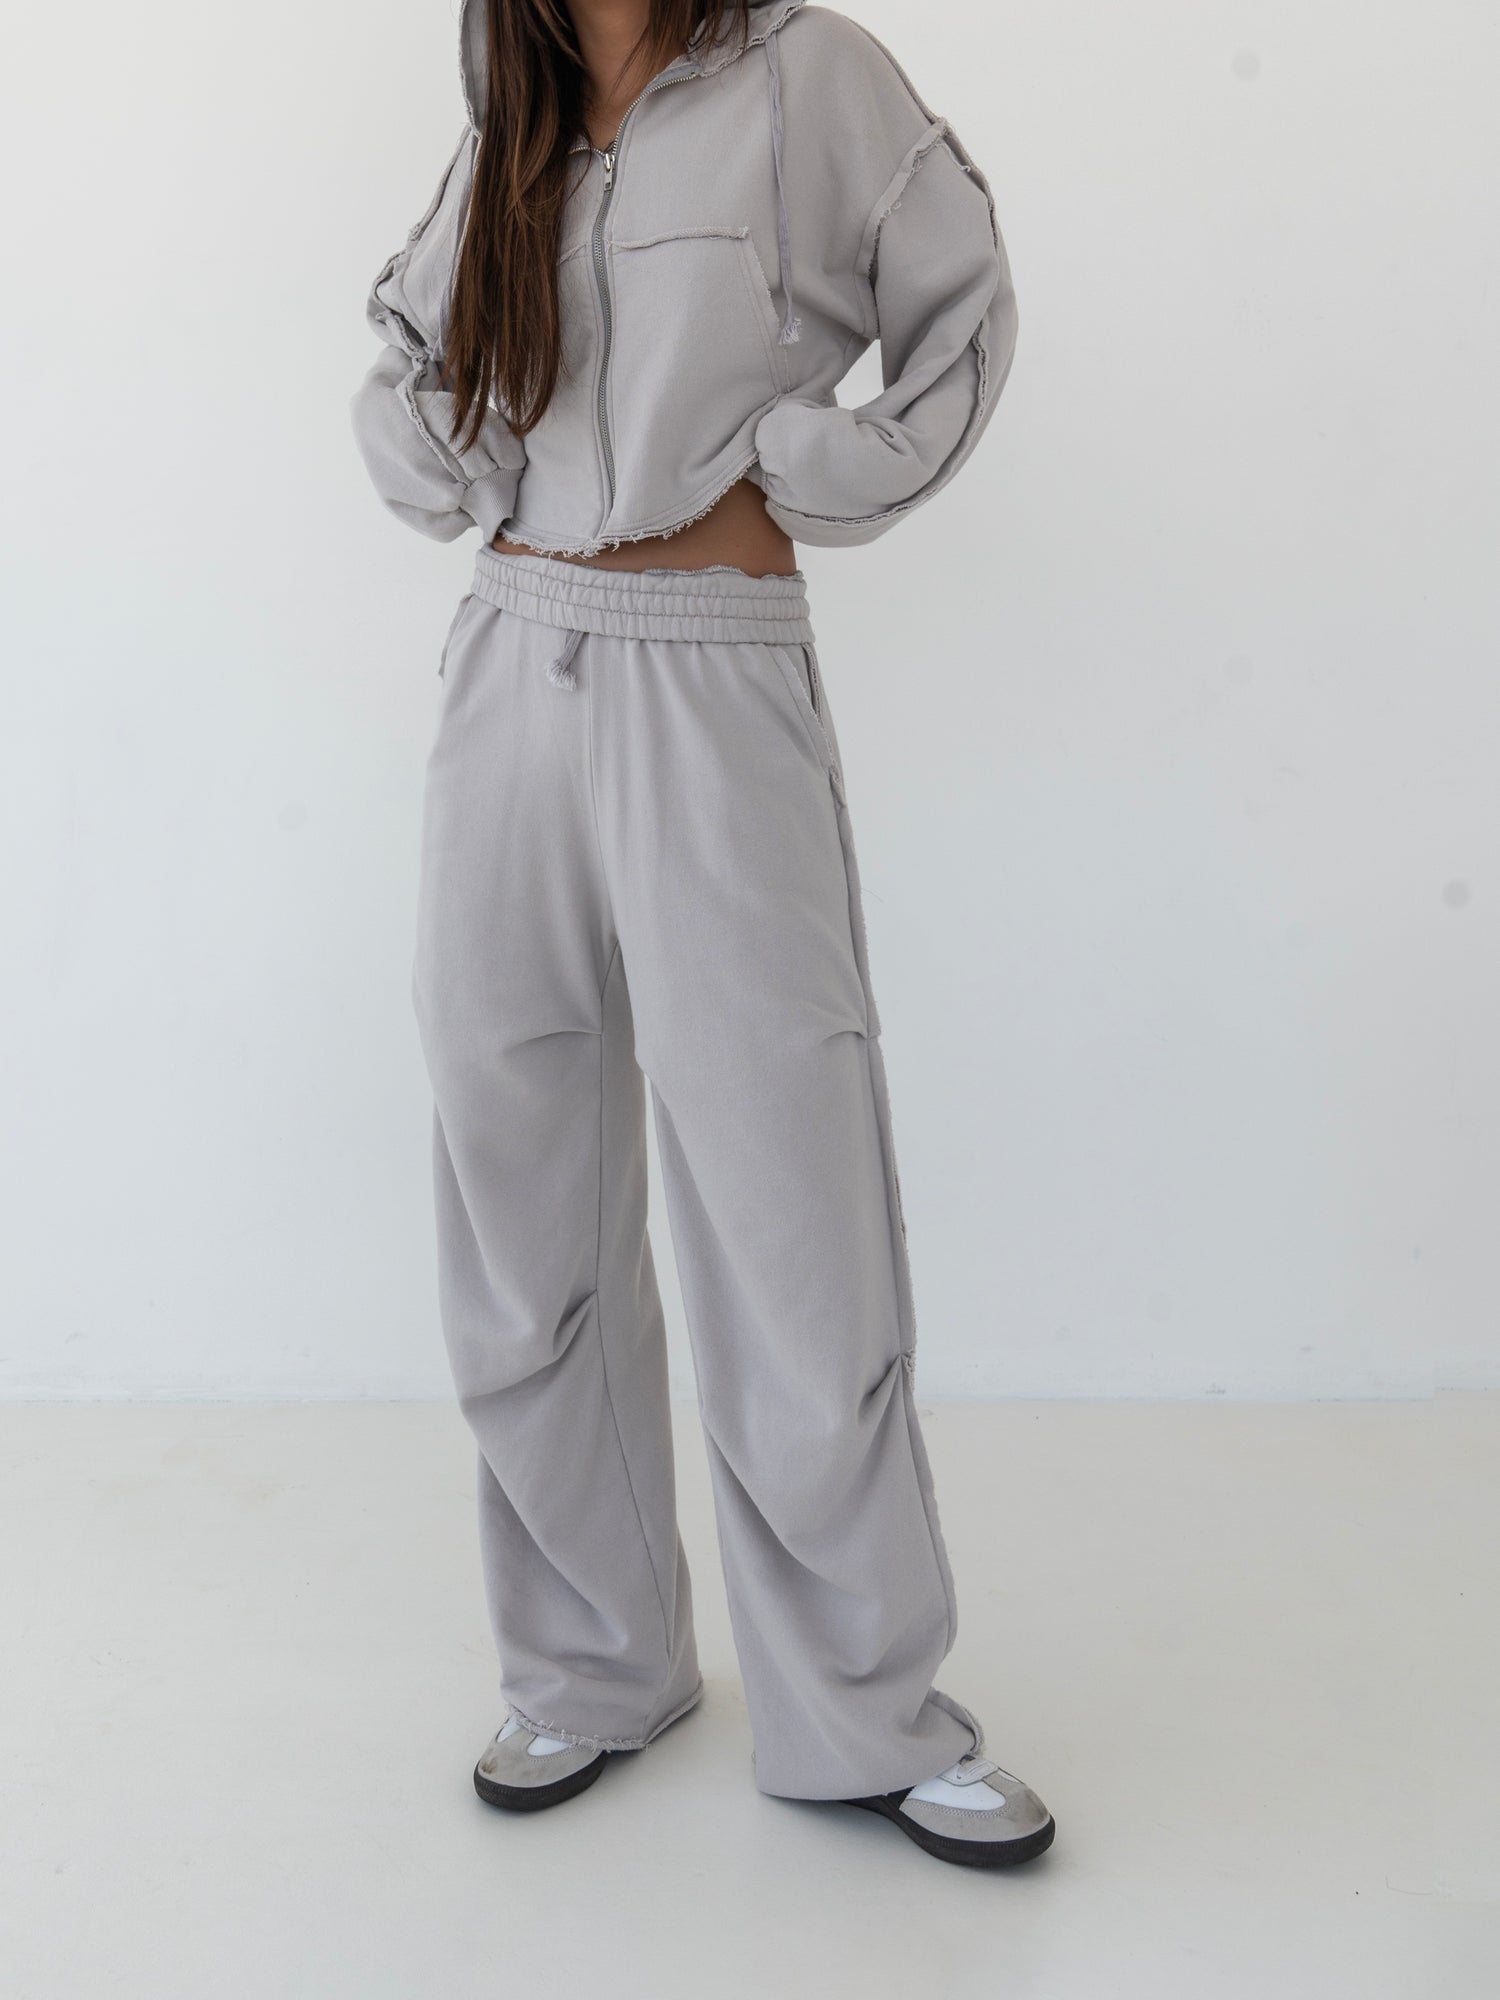 Sasha Open Seam Pin Tuck Sweatpants / Light Grey